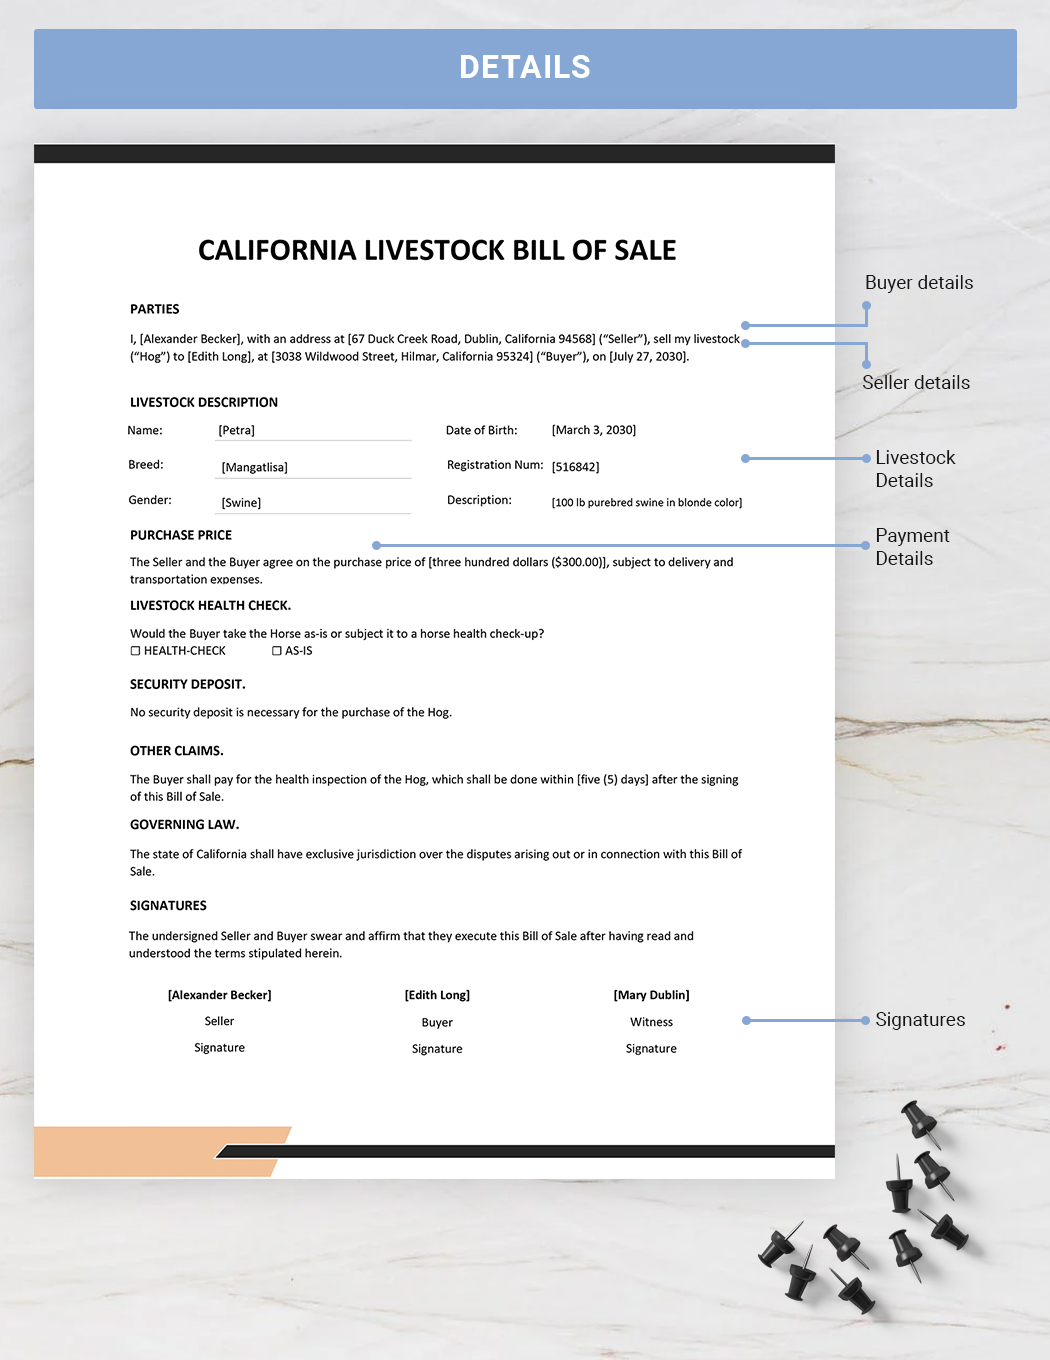 California Livestock Bill of Sale Template